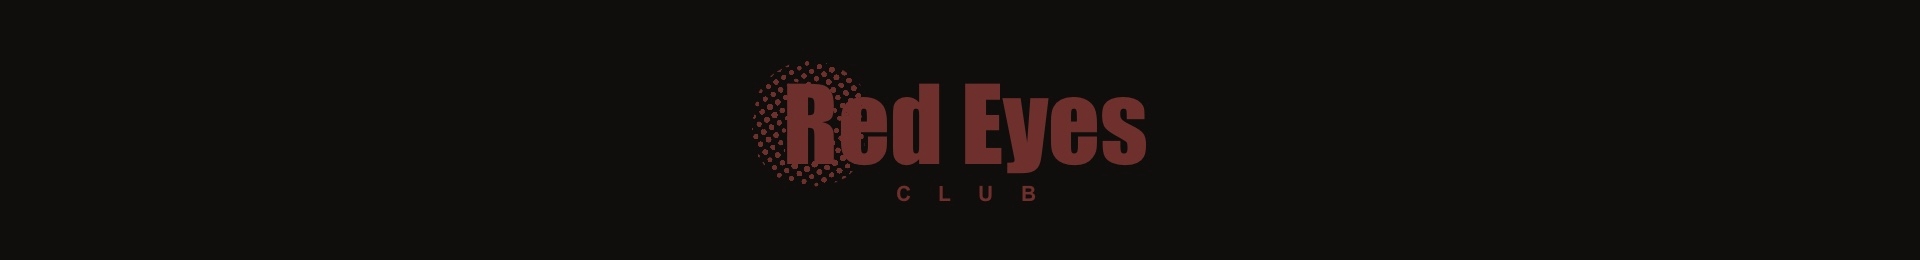 Red Eyes Club banner